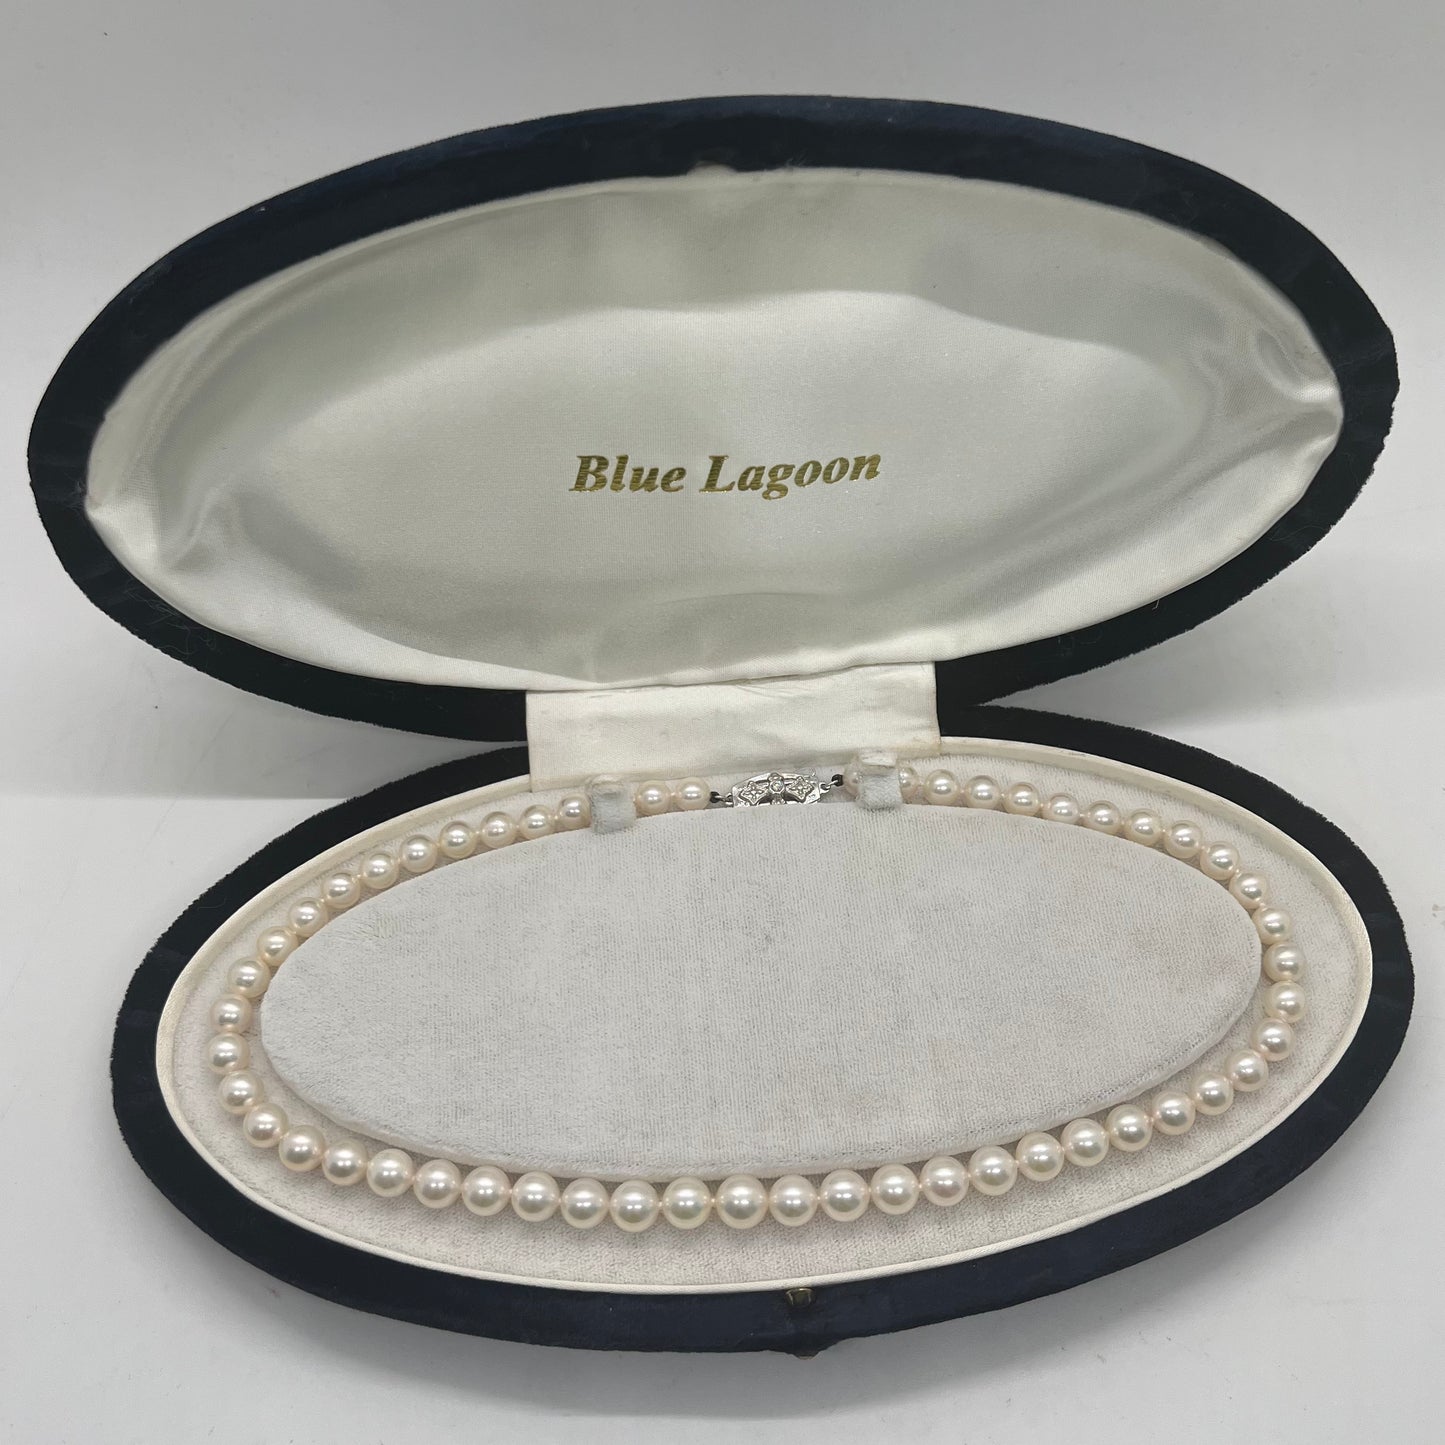 Mikimoto's Blue Lagoon Marilyn Monroe Pearl Necklace